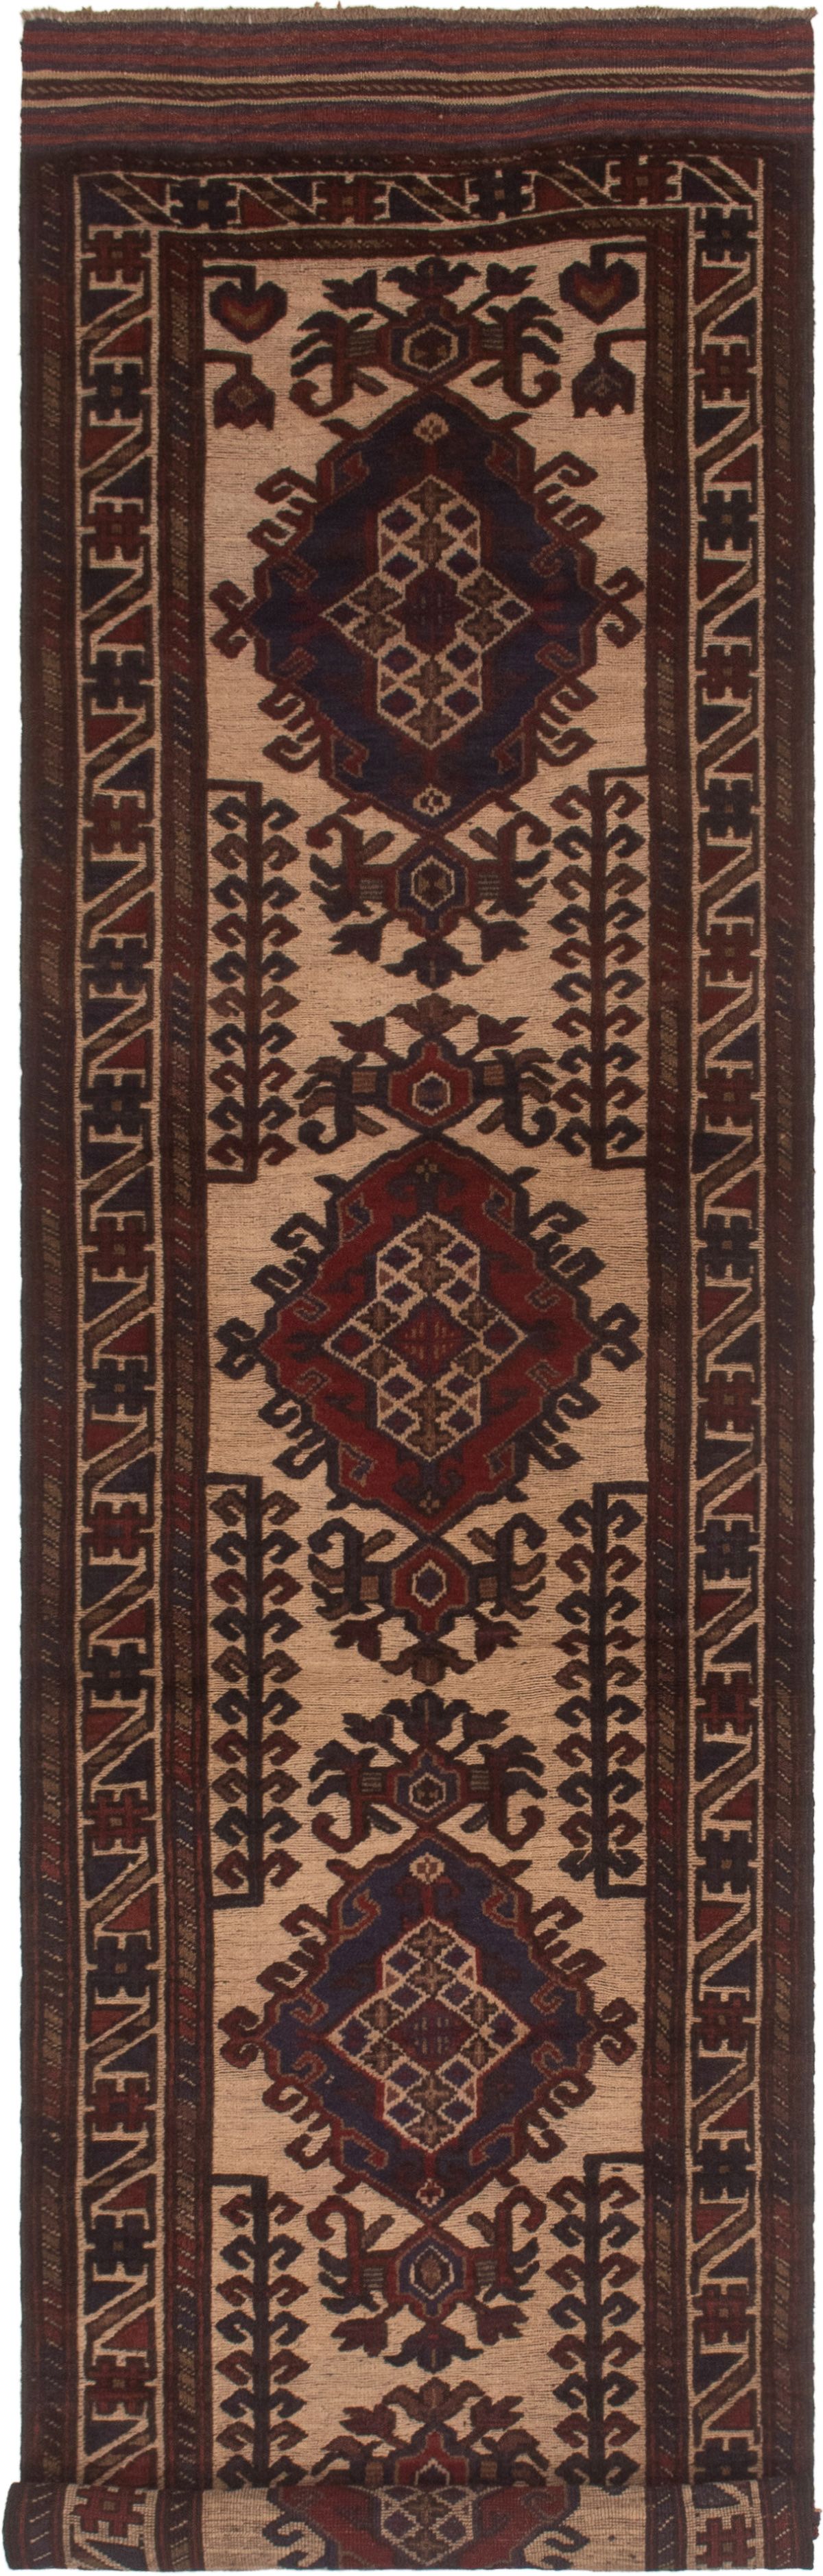 Hand-knotted Tajik Caucasian Cream Wool Rug 2'10" x 12'5" Size: 2'10" x 12'5"  